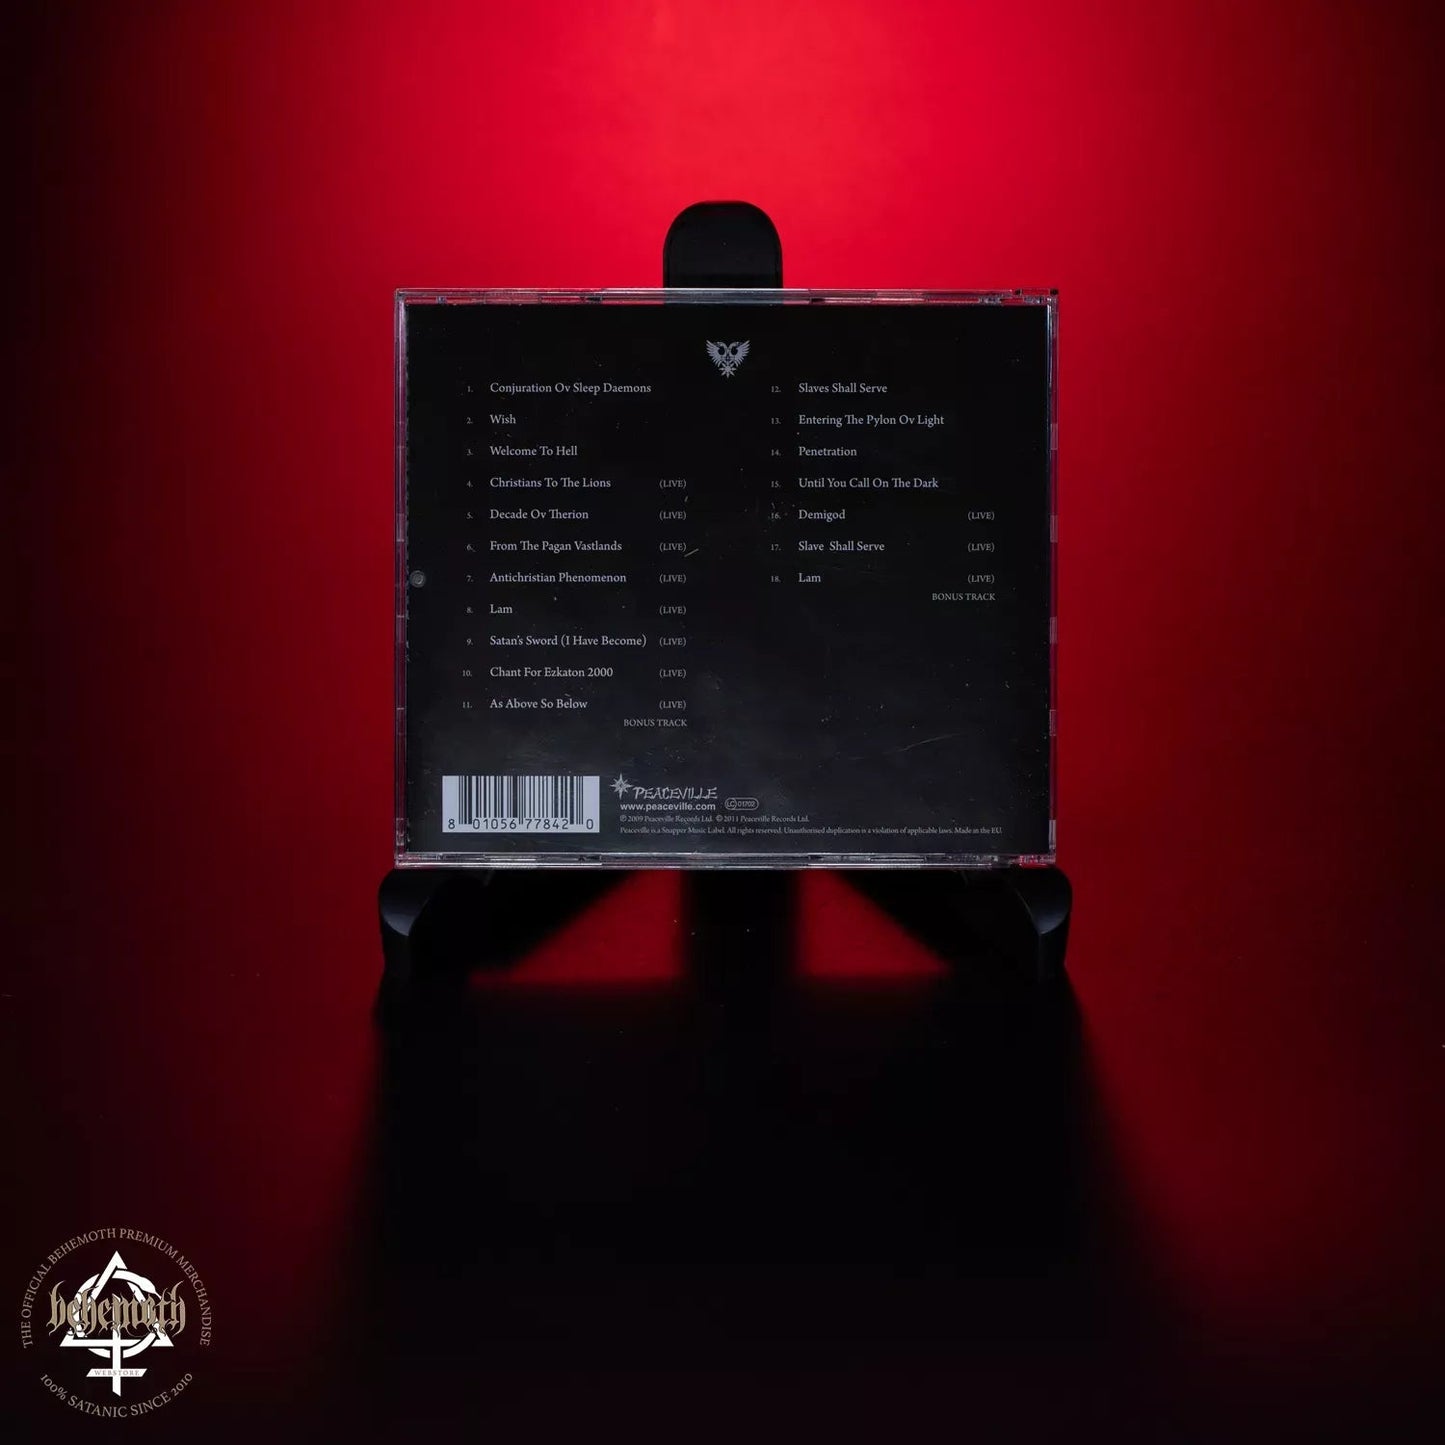 BEHEMOTH - Abyssus Abyssum Invocat CD, signed